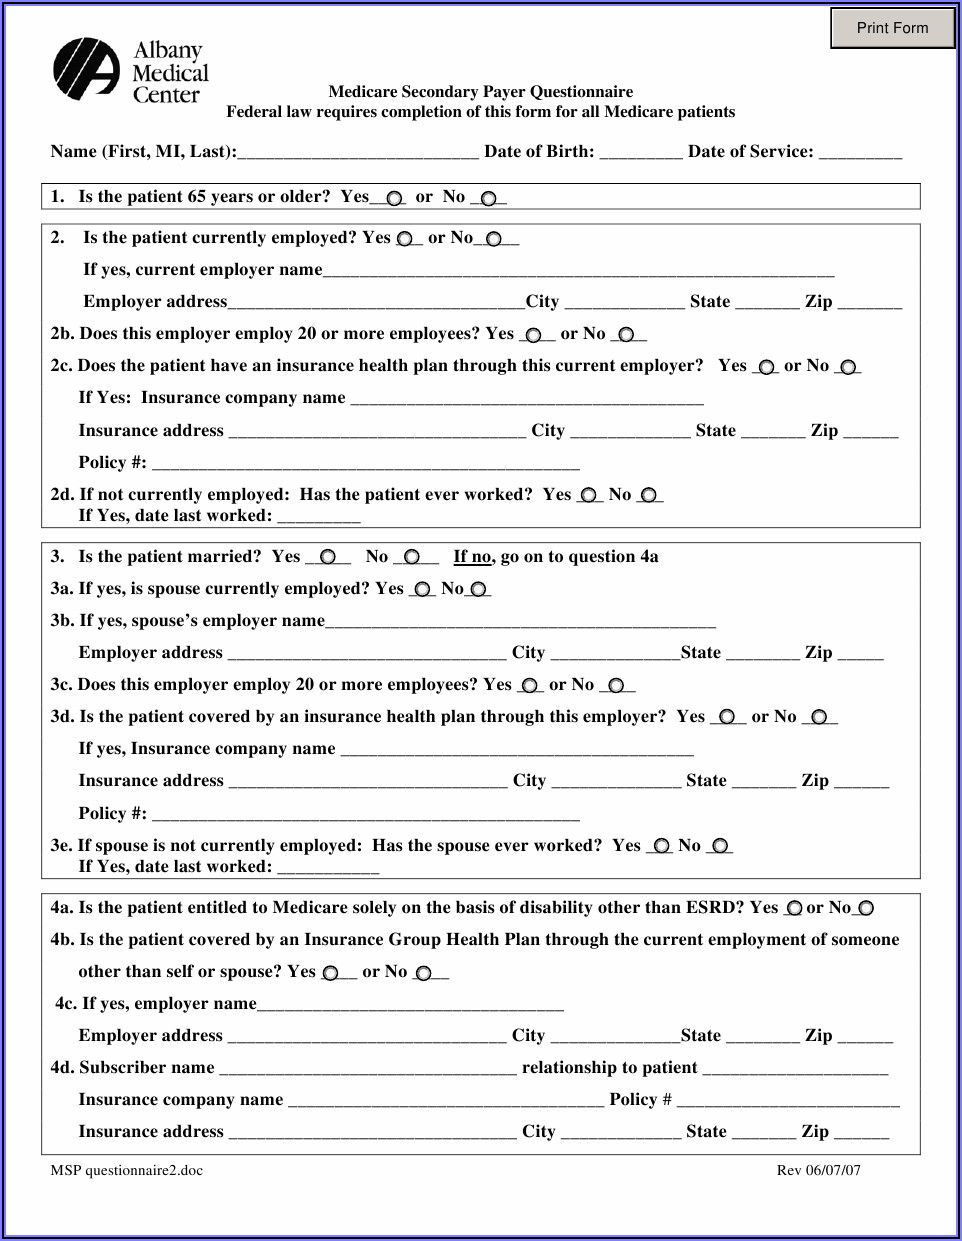 Medicare Msp Questionnaire Form